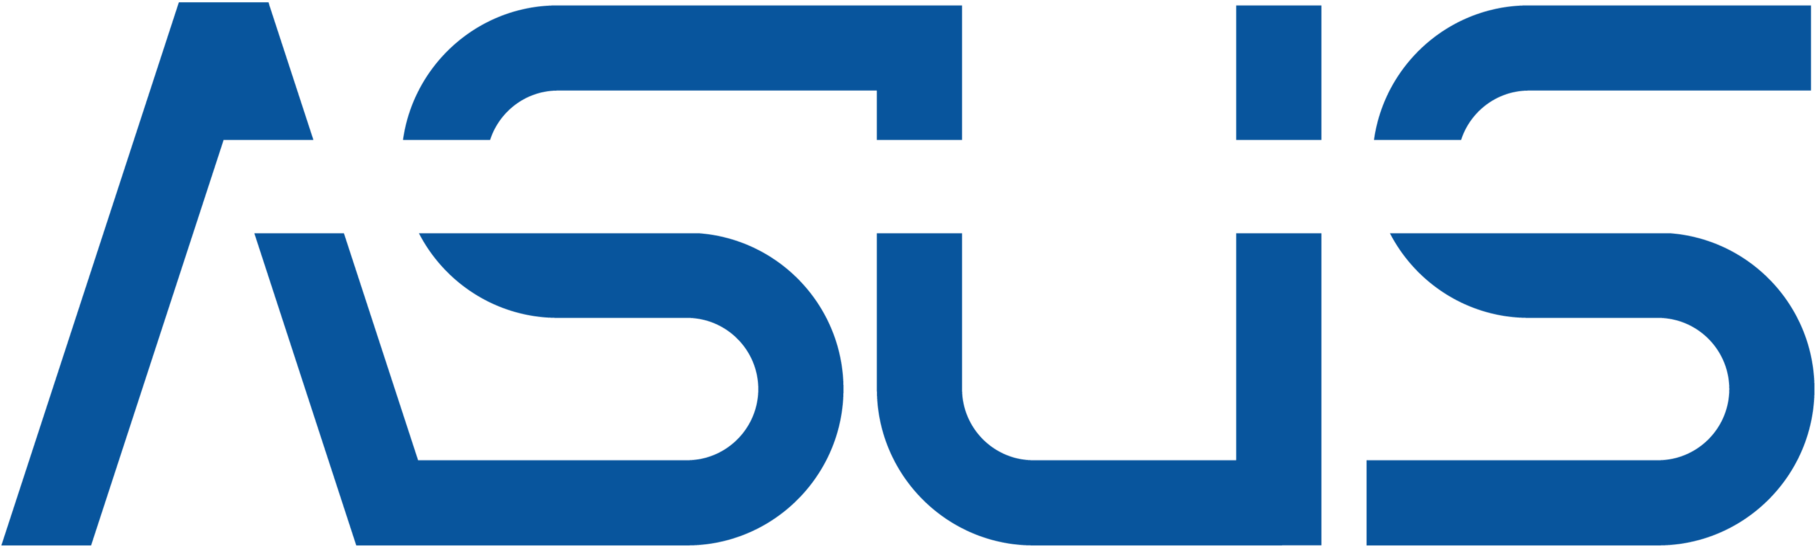 Asus Logo Background PNG Image